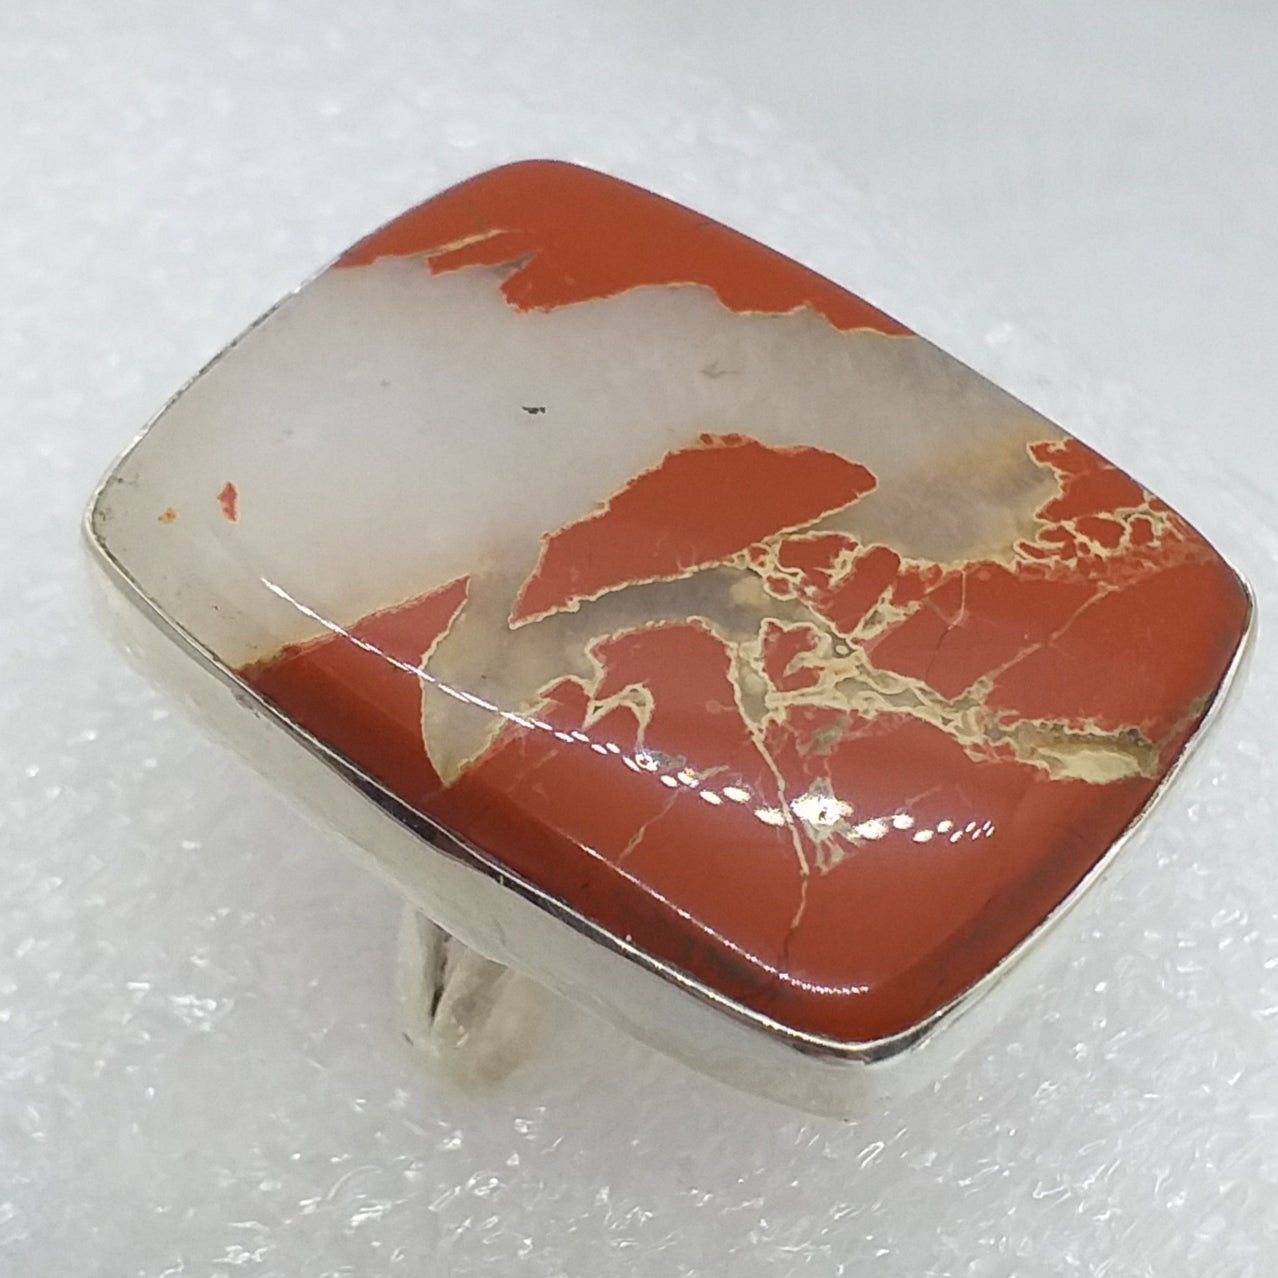 Roter Brekzien JASPIS Ring Gr. 19 925 Sterling Silber RIESIG